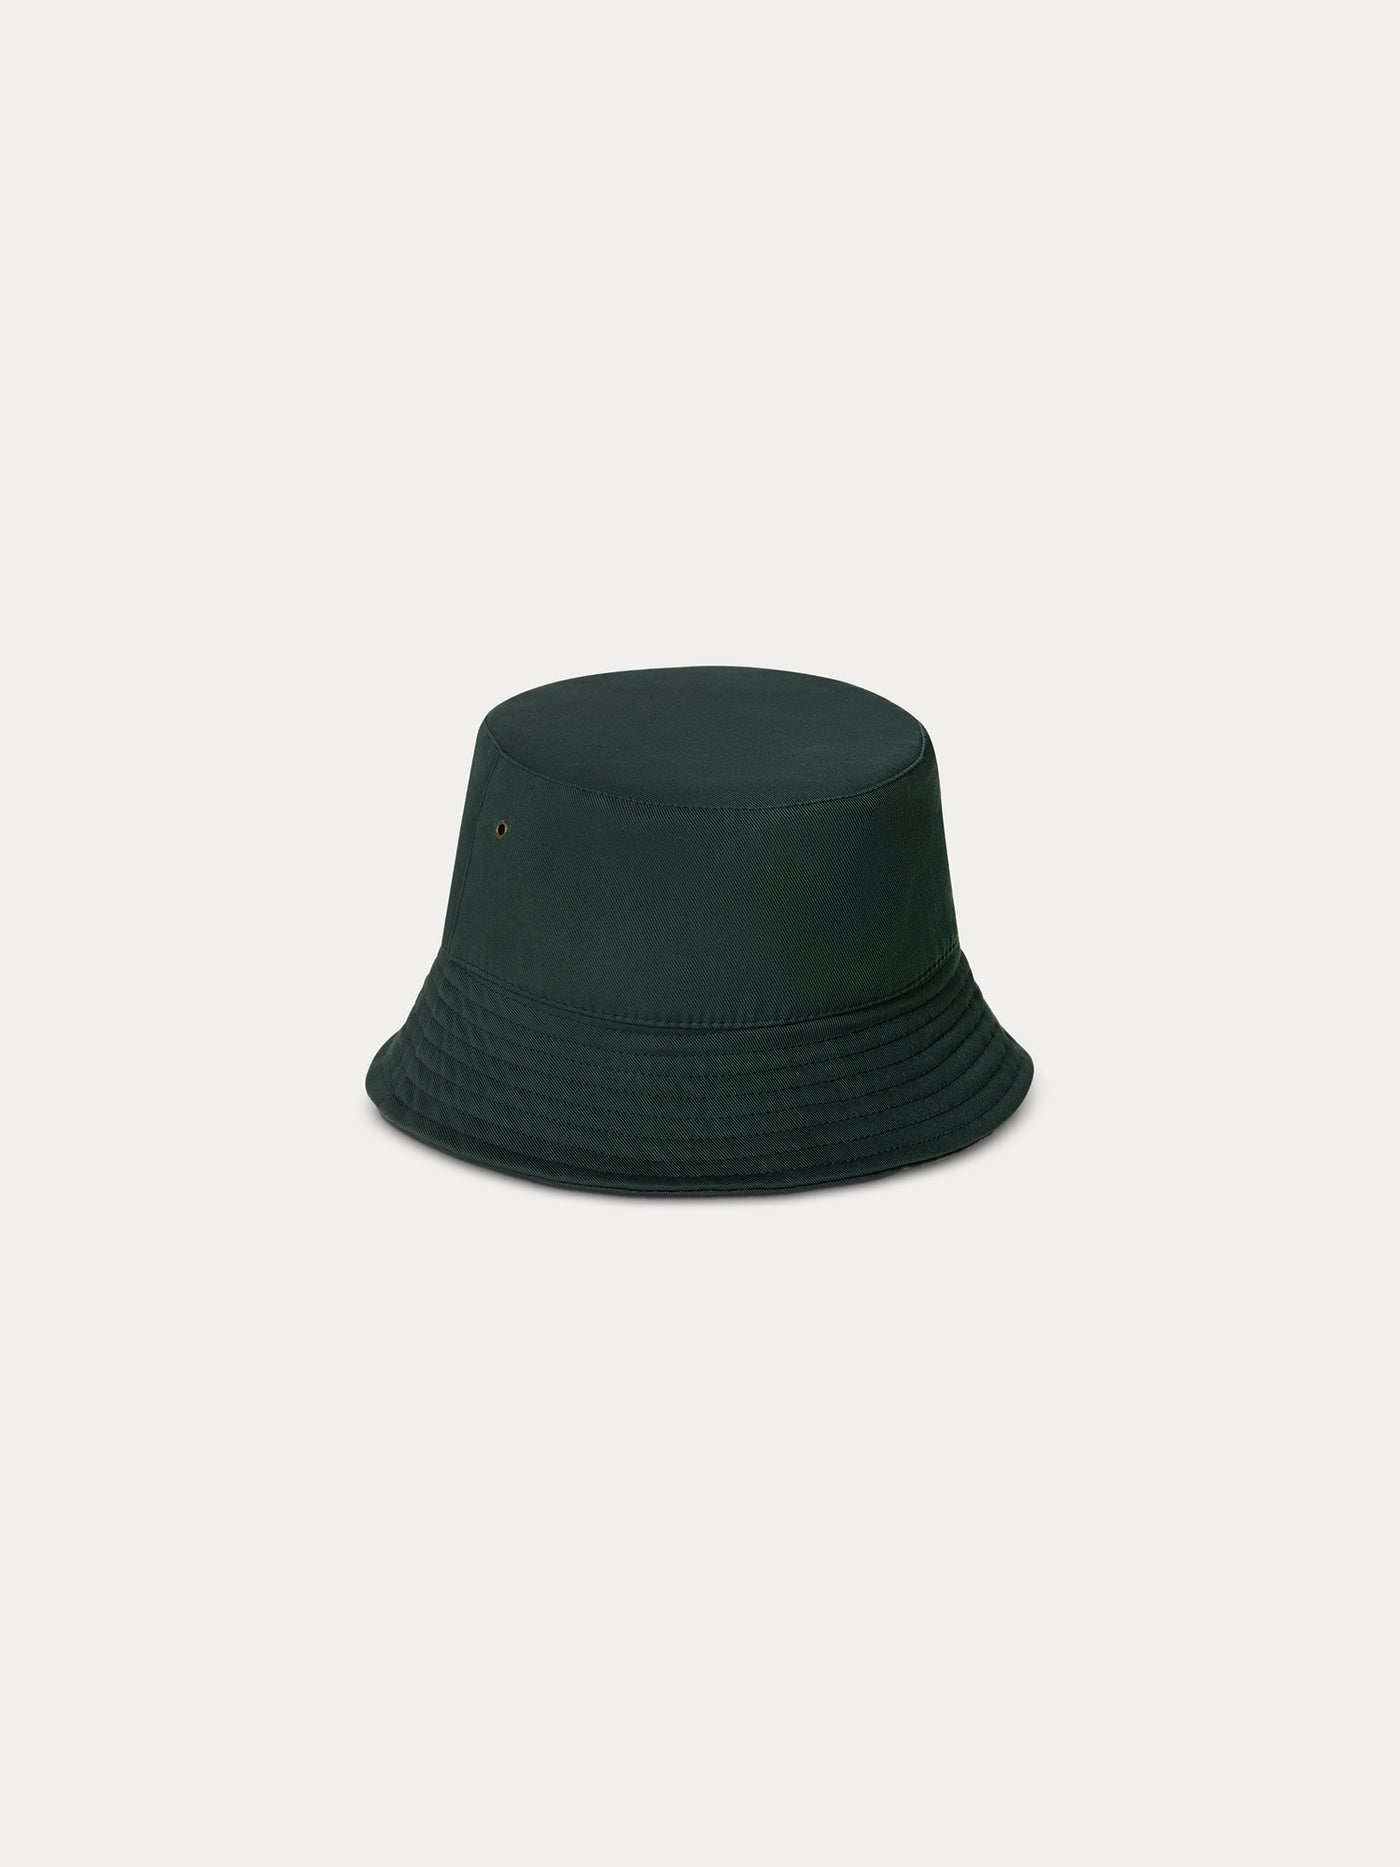 Theana hat